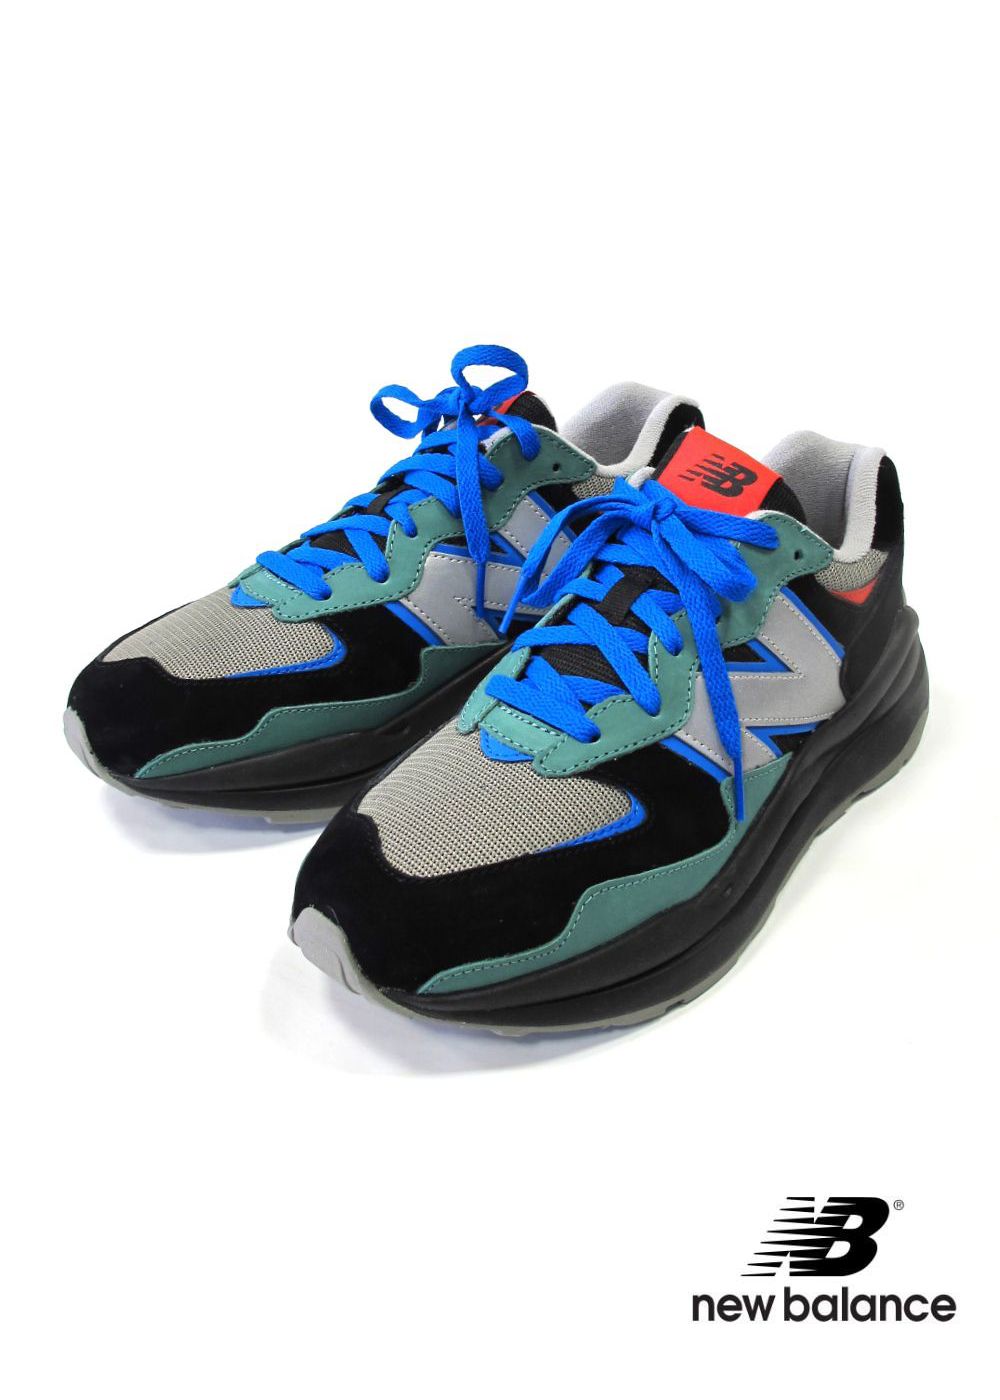 x NEW BALANCE M5740 x mita sneakers / ニューバランス&ミタスニーカーズ コラボスニーカー - US-8  (26cm)